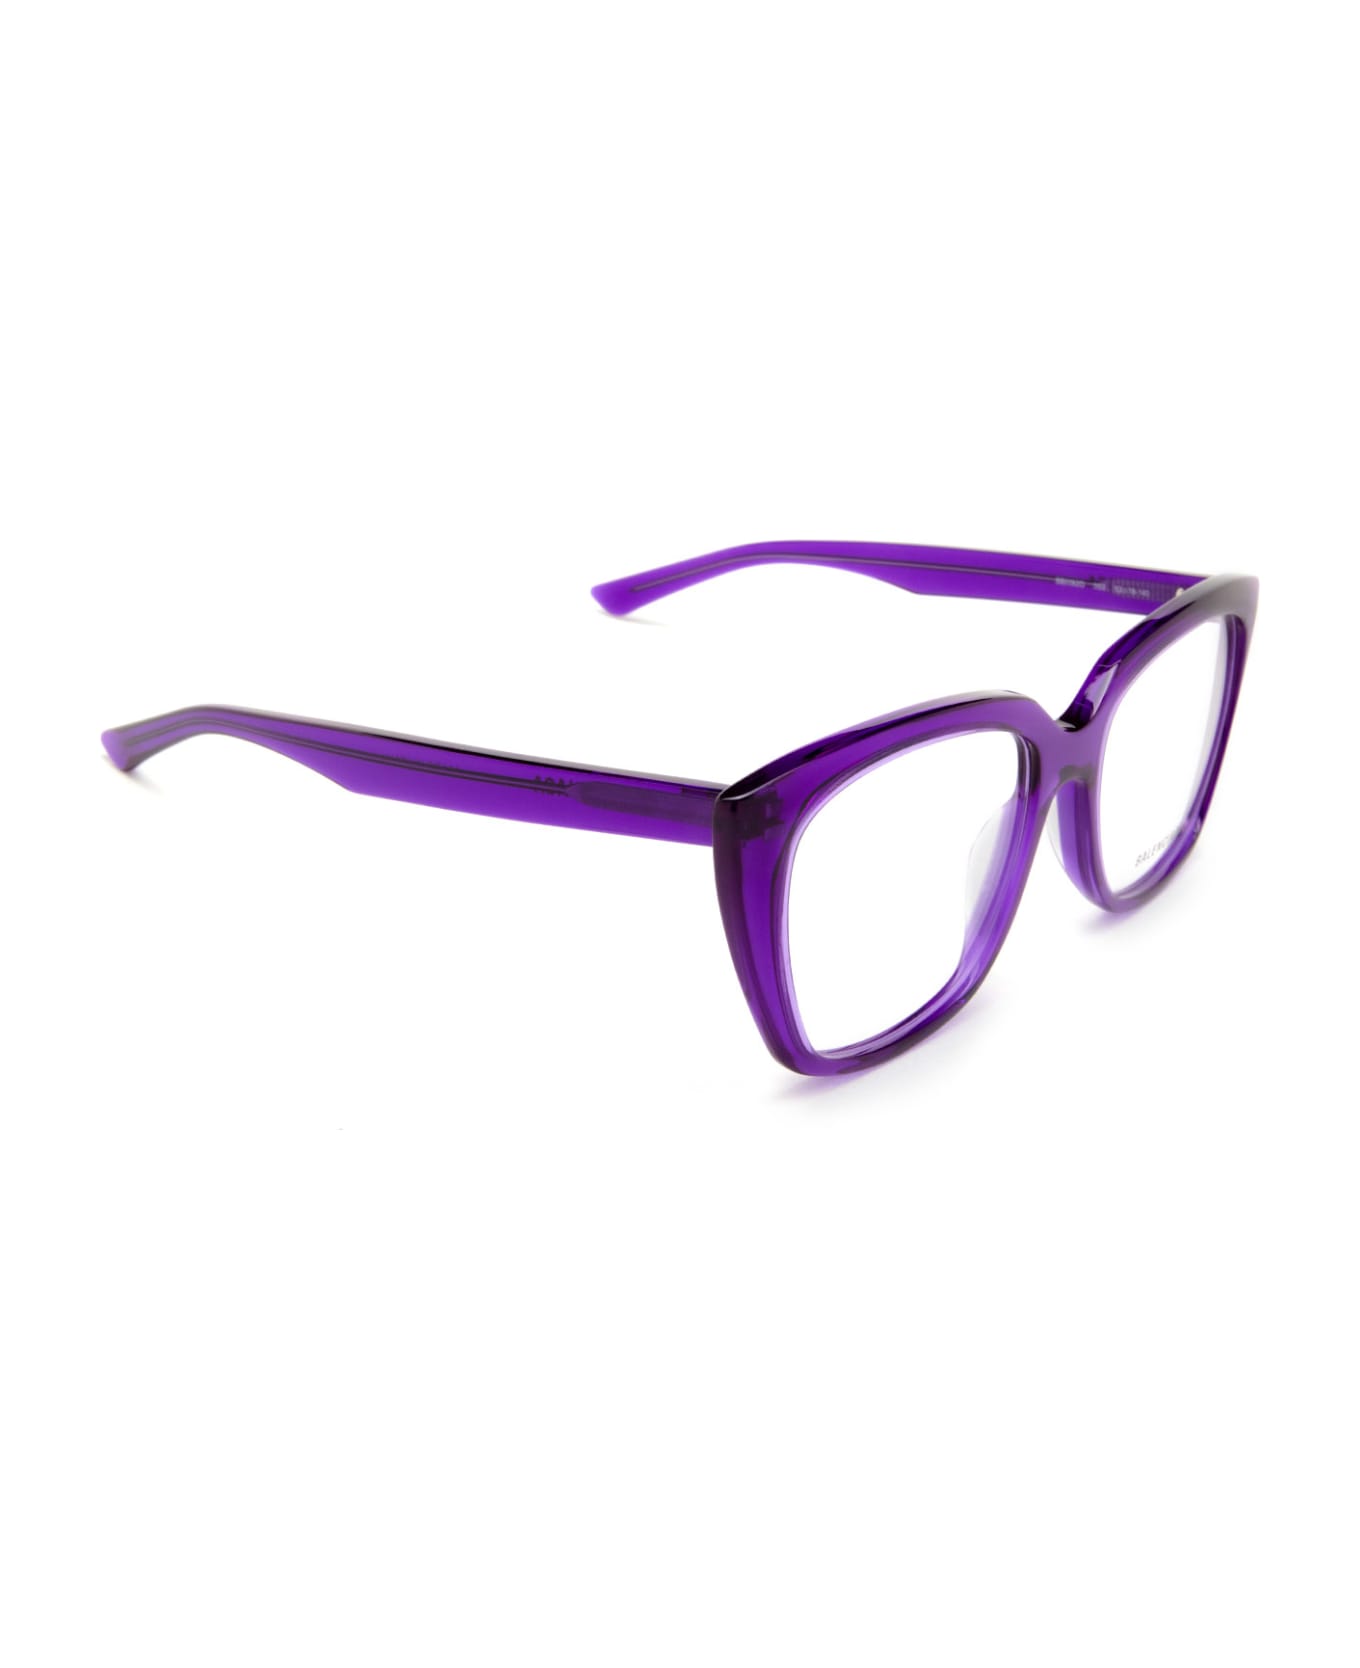 Balenciaga Eyewear Bb0062o Violet Glasses - Violet